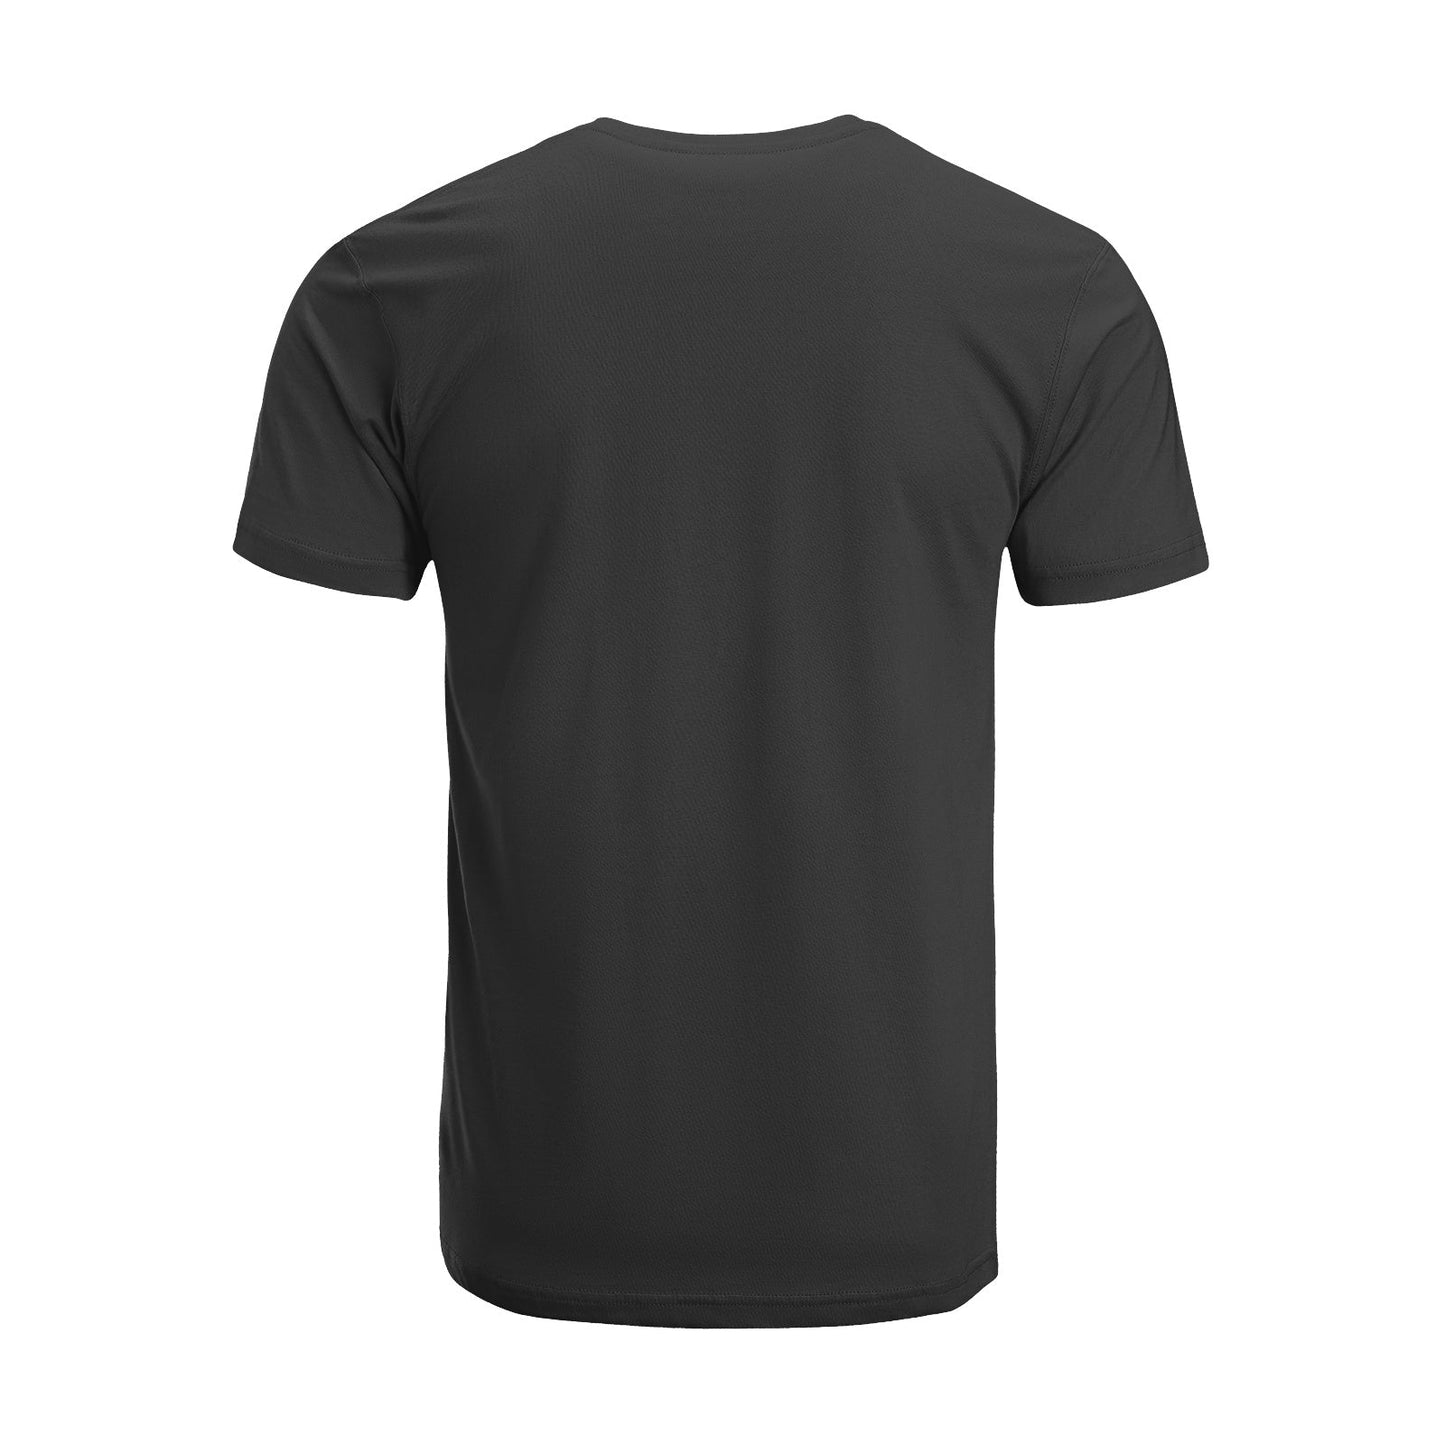 Unisex Short Sleeve Crew Neck Cotton Jersey T-Shirt Gym No. 42 - Tara-Outfits.com